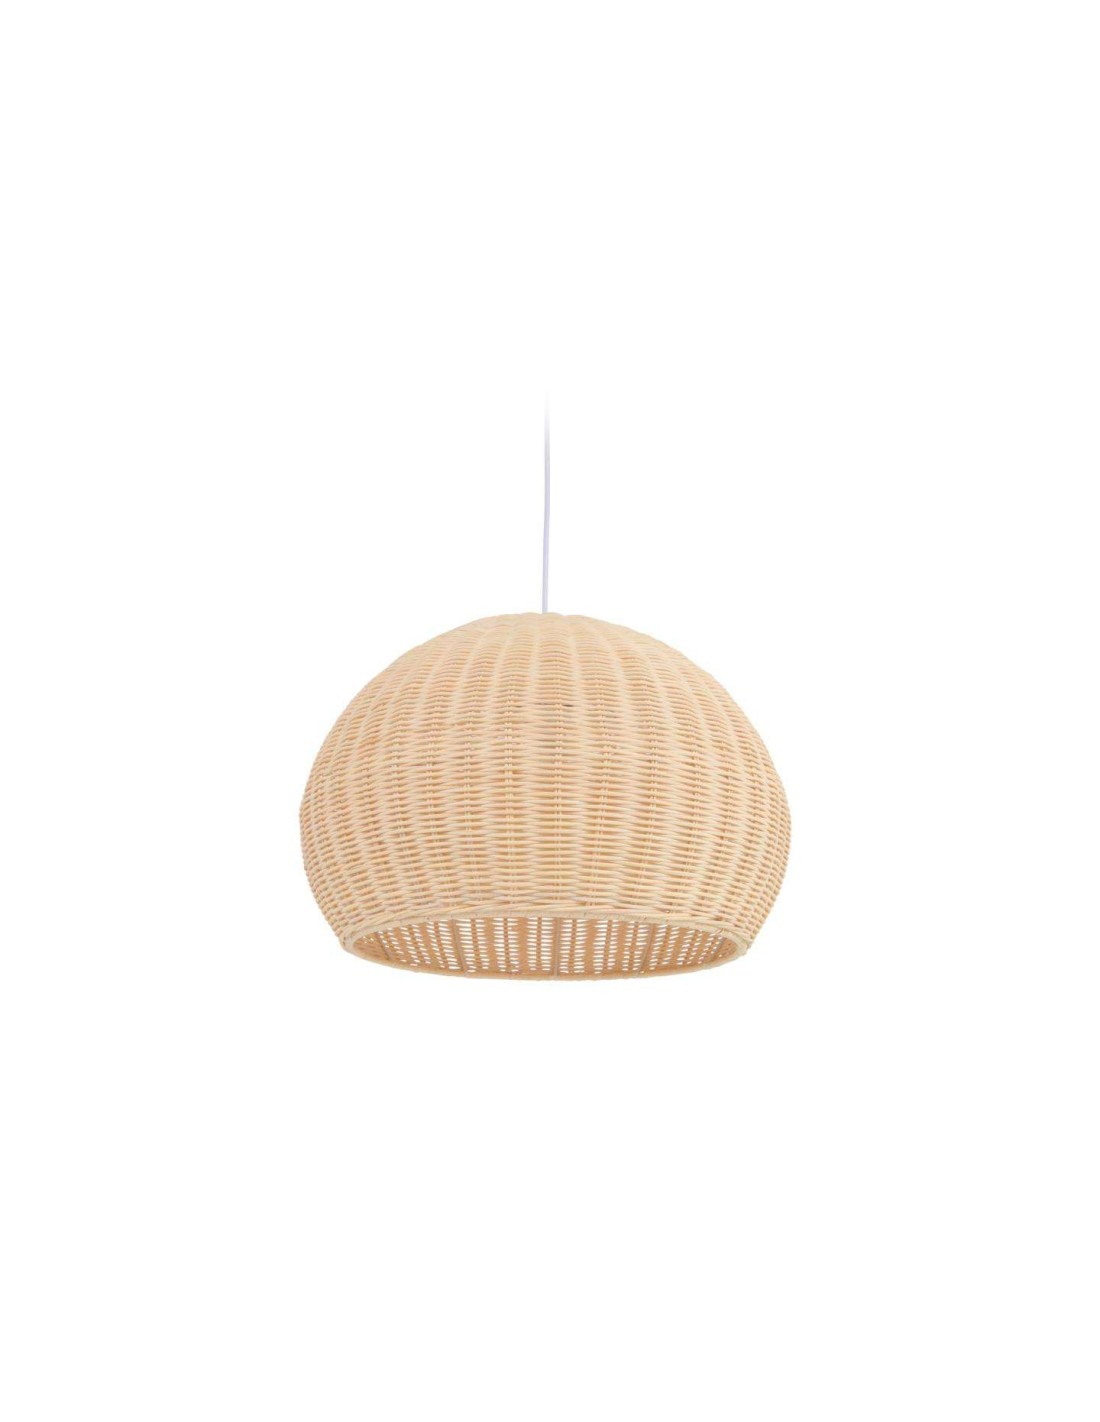 Racional duda bandeja Pantalla lámpara de techo Deyarina de ratán con acabado natural Ø 45 cm -  Kave Home; Vackart. AA8786FN46